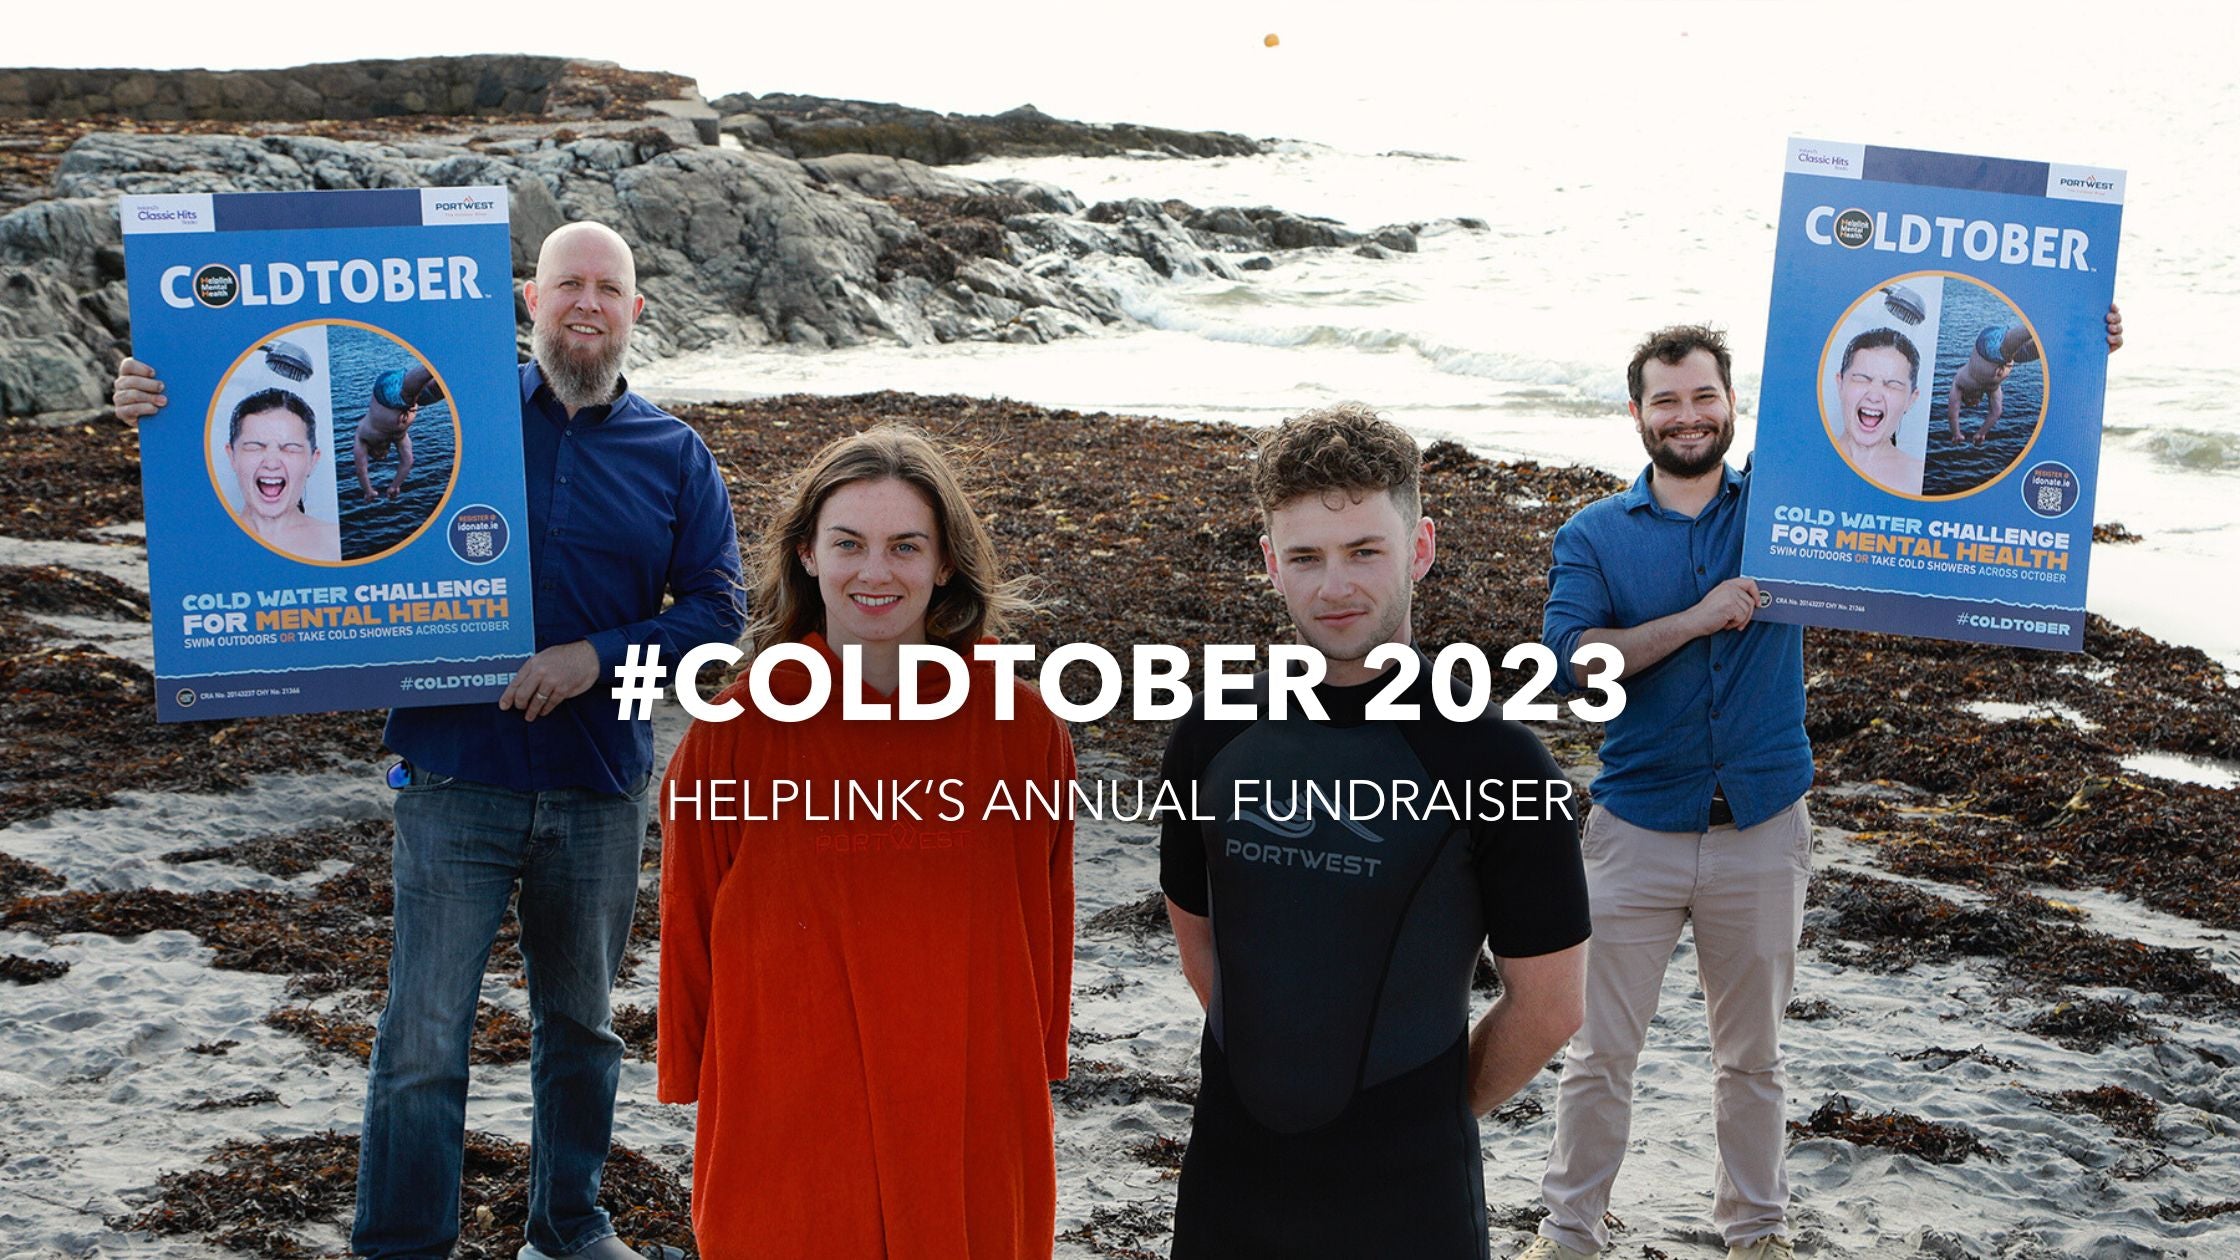 Coldtober - Helplink's Annual Fundraiser